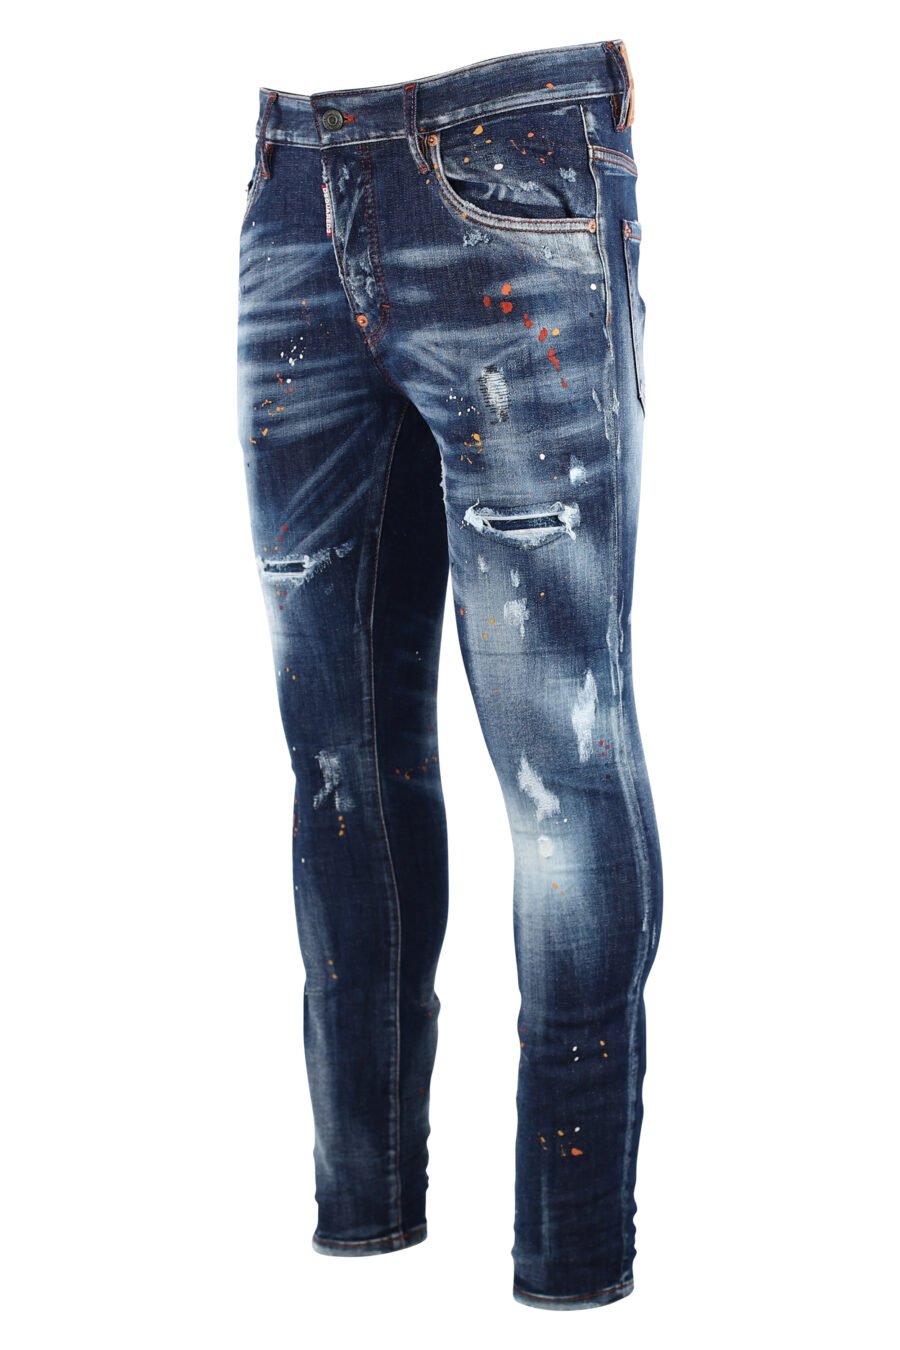 Super twinkie" blue frayed jeans - IMG 7537